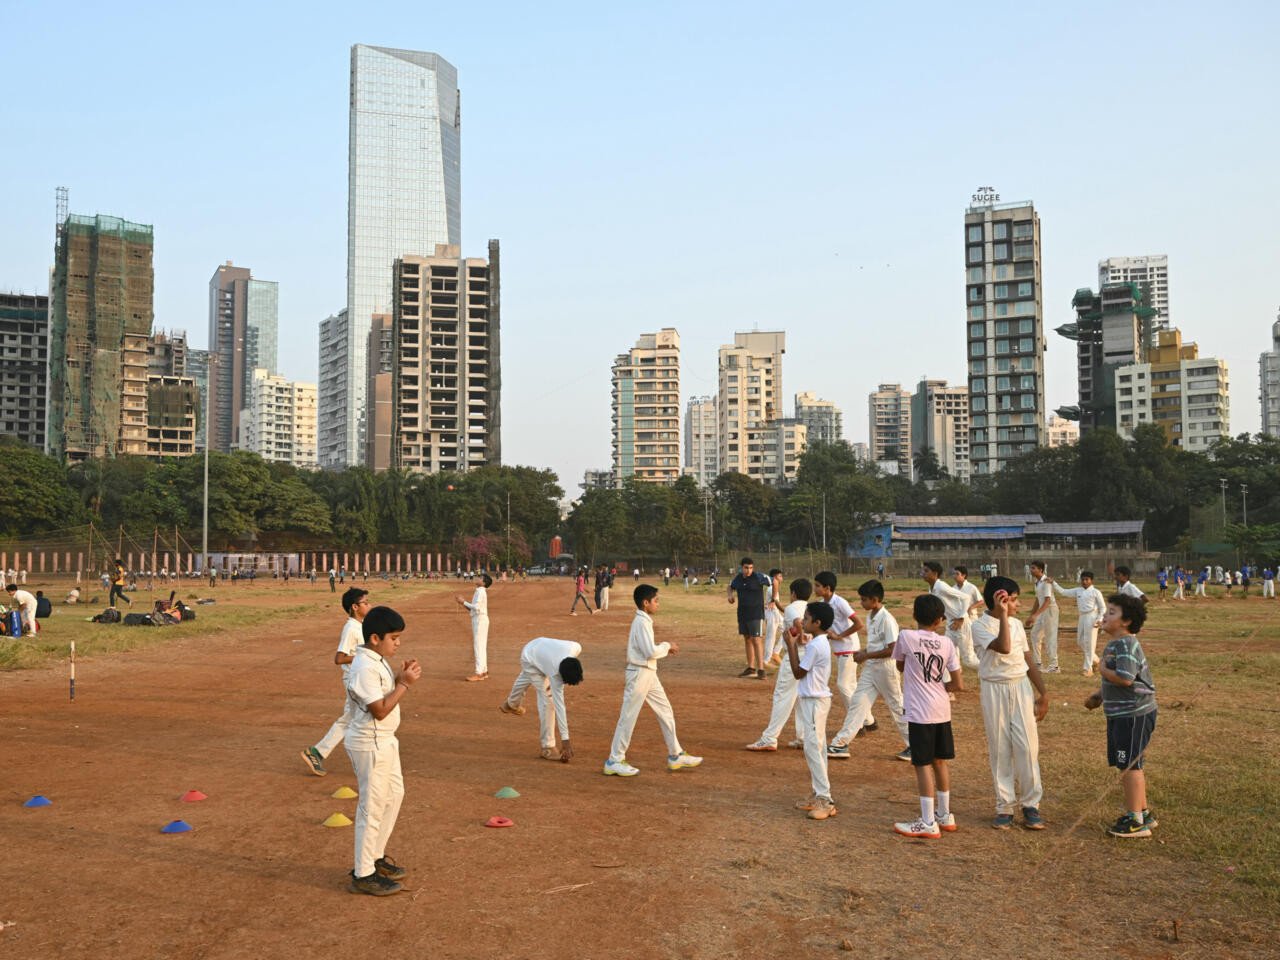 Maidans still the nursery of Mumbai cricket | The Express Tribune